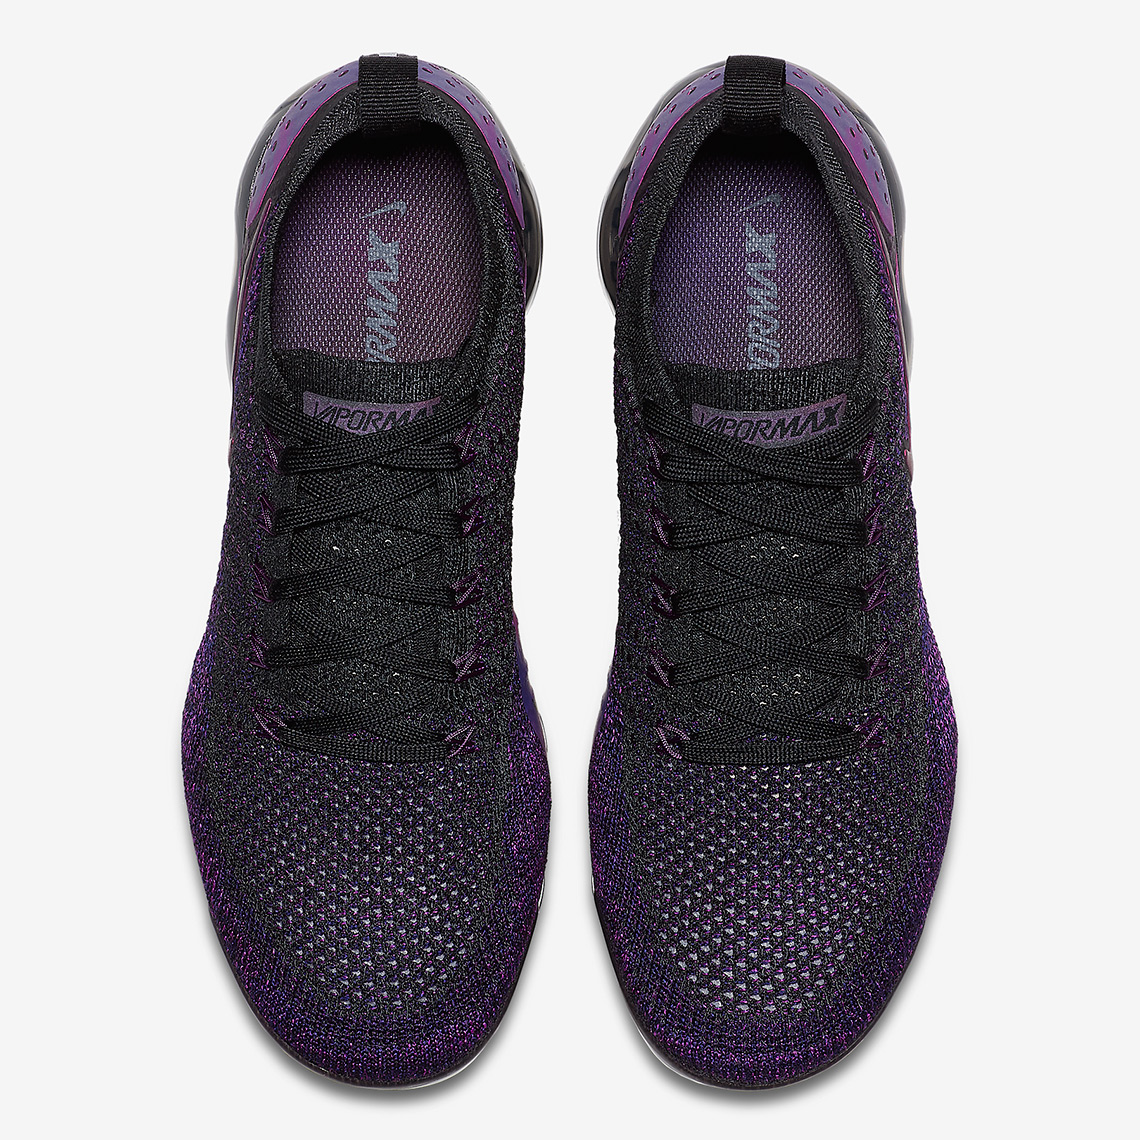 Nike Vapormax Night Purple 942842 013 5